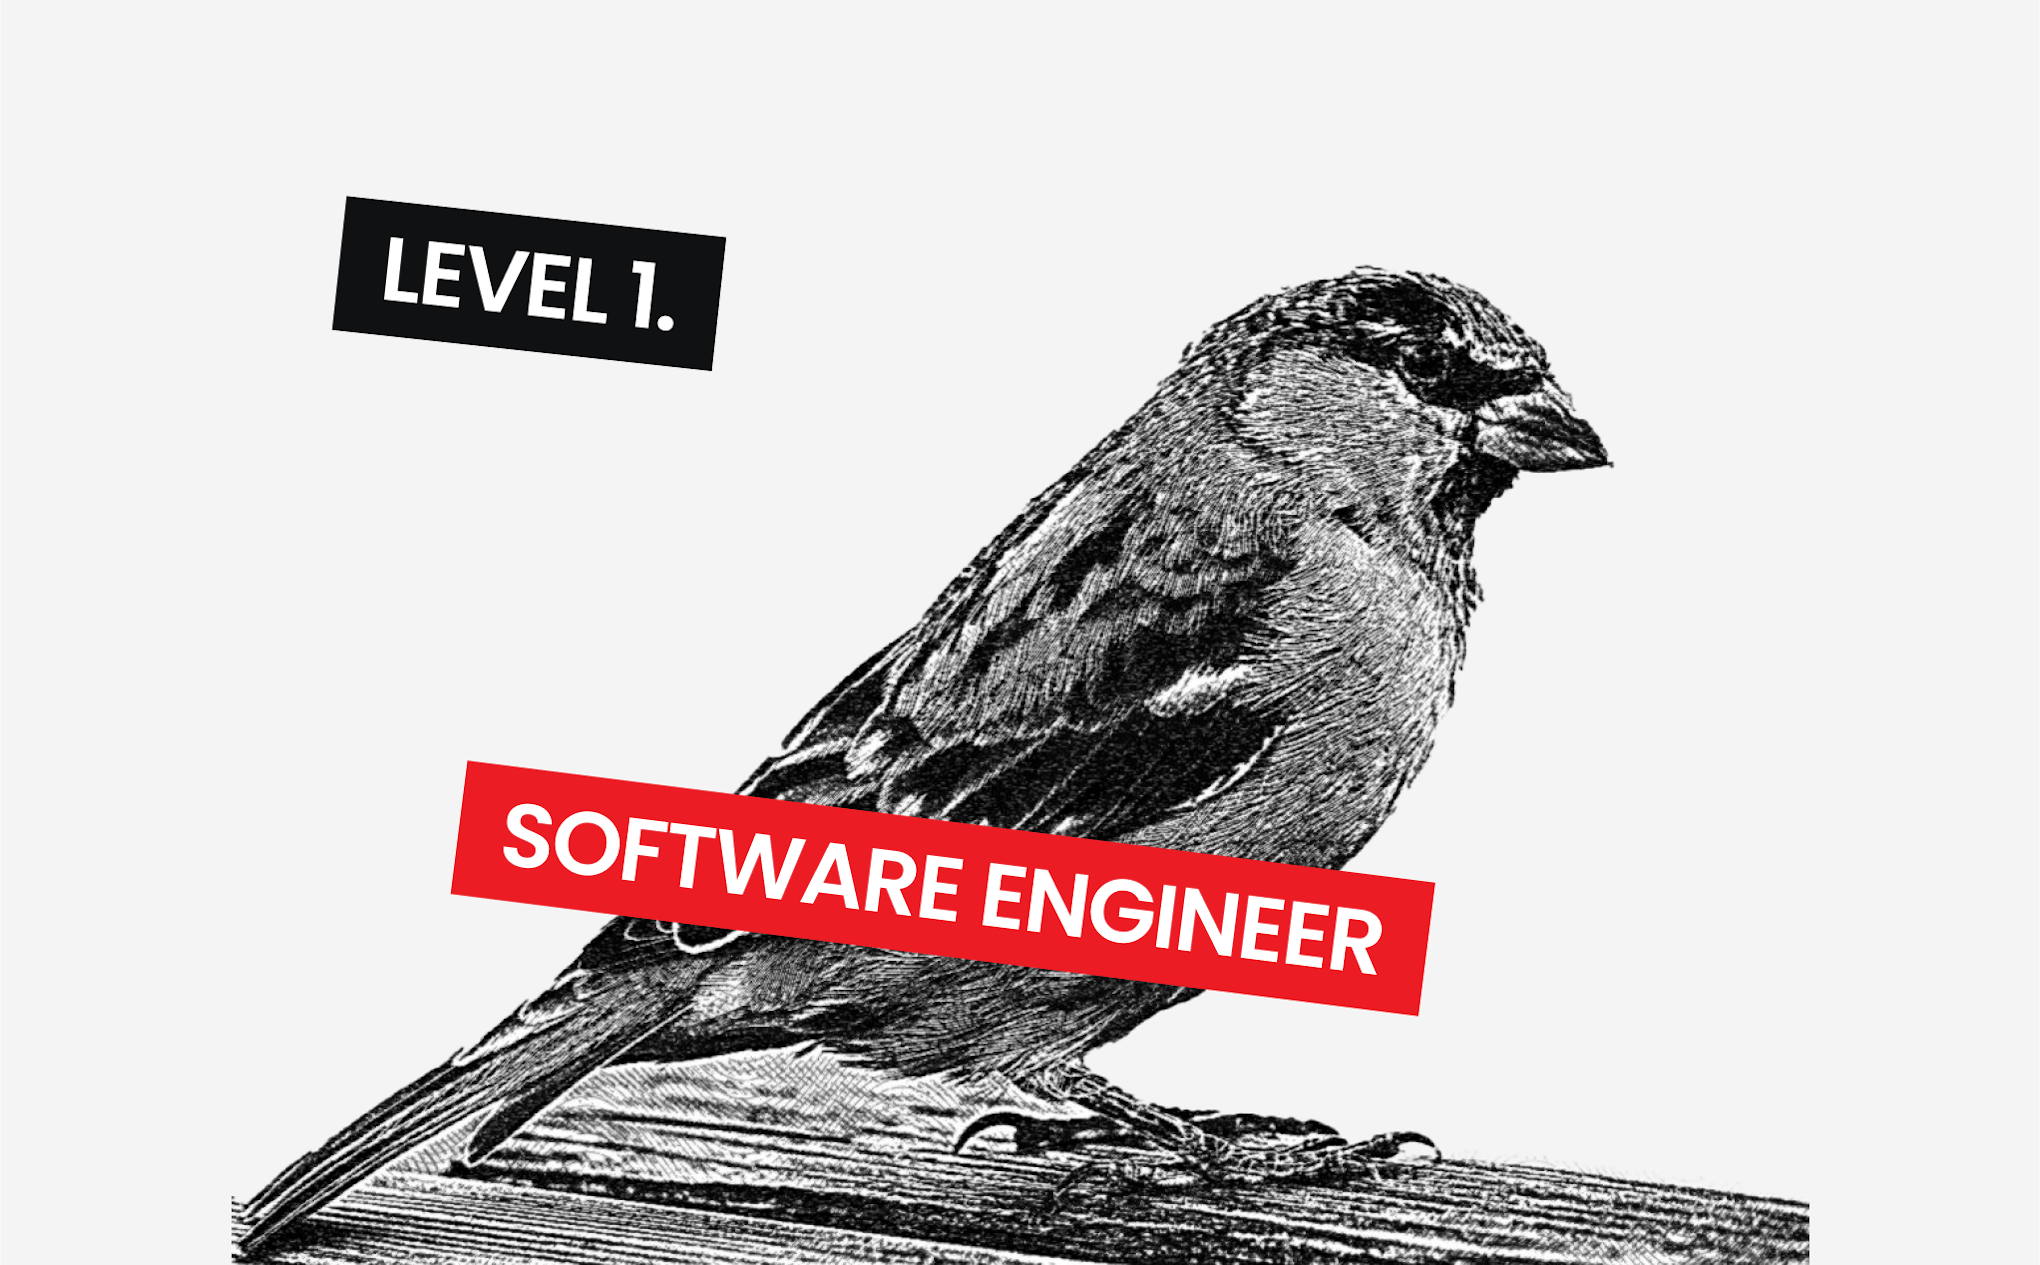 Software engineer.